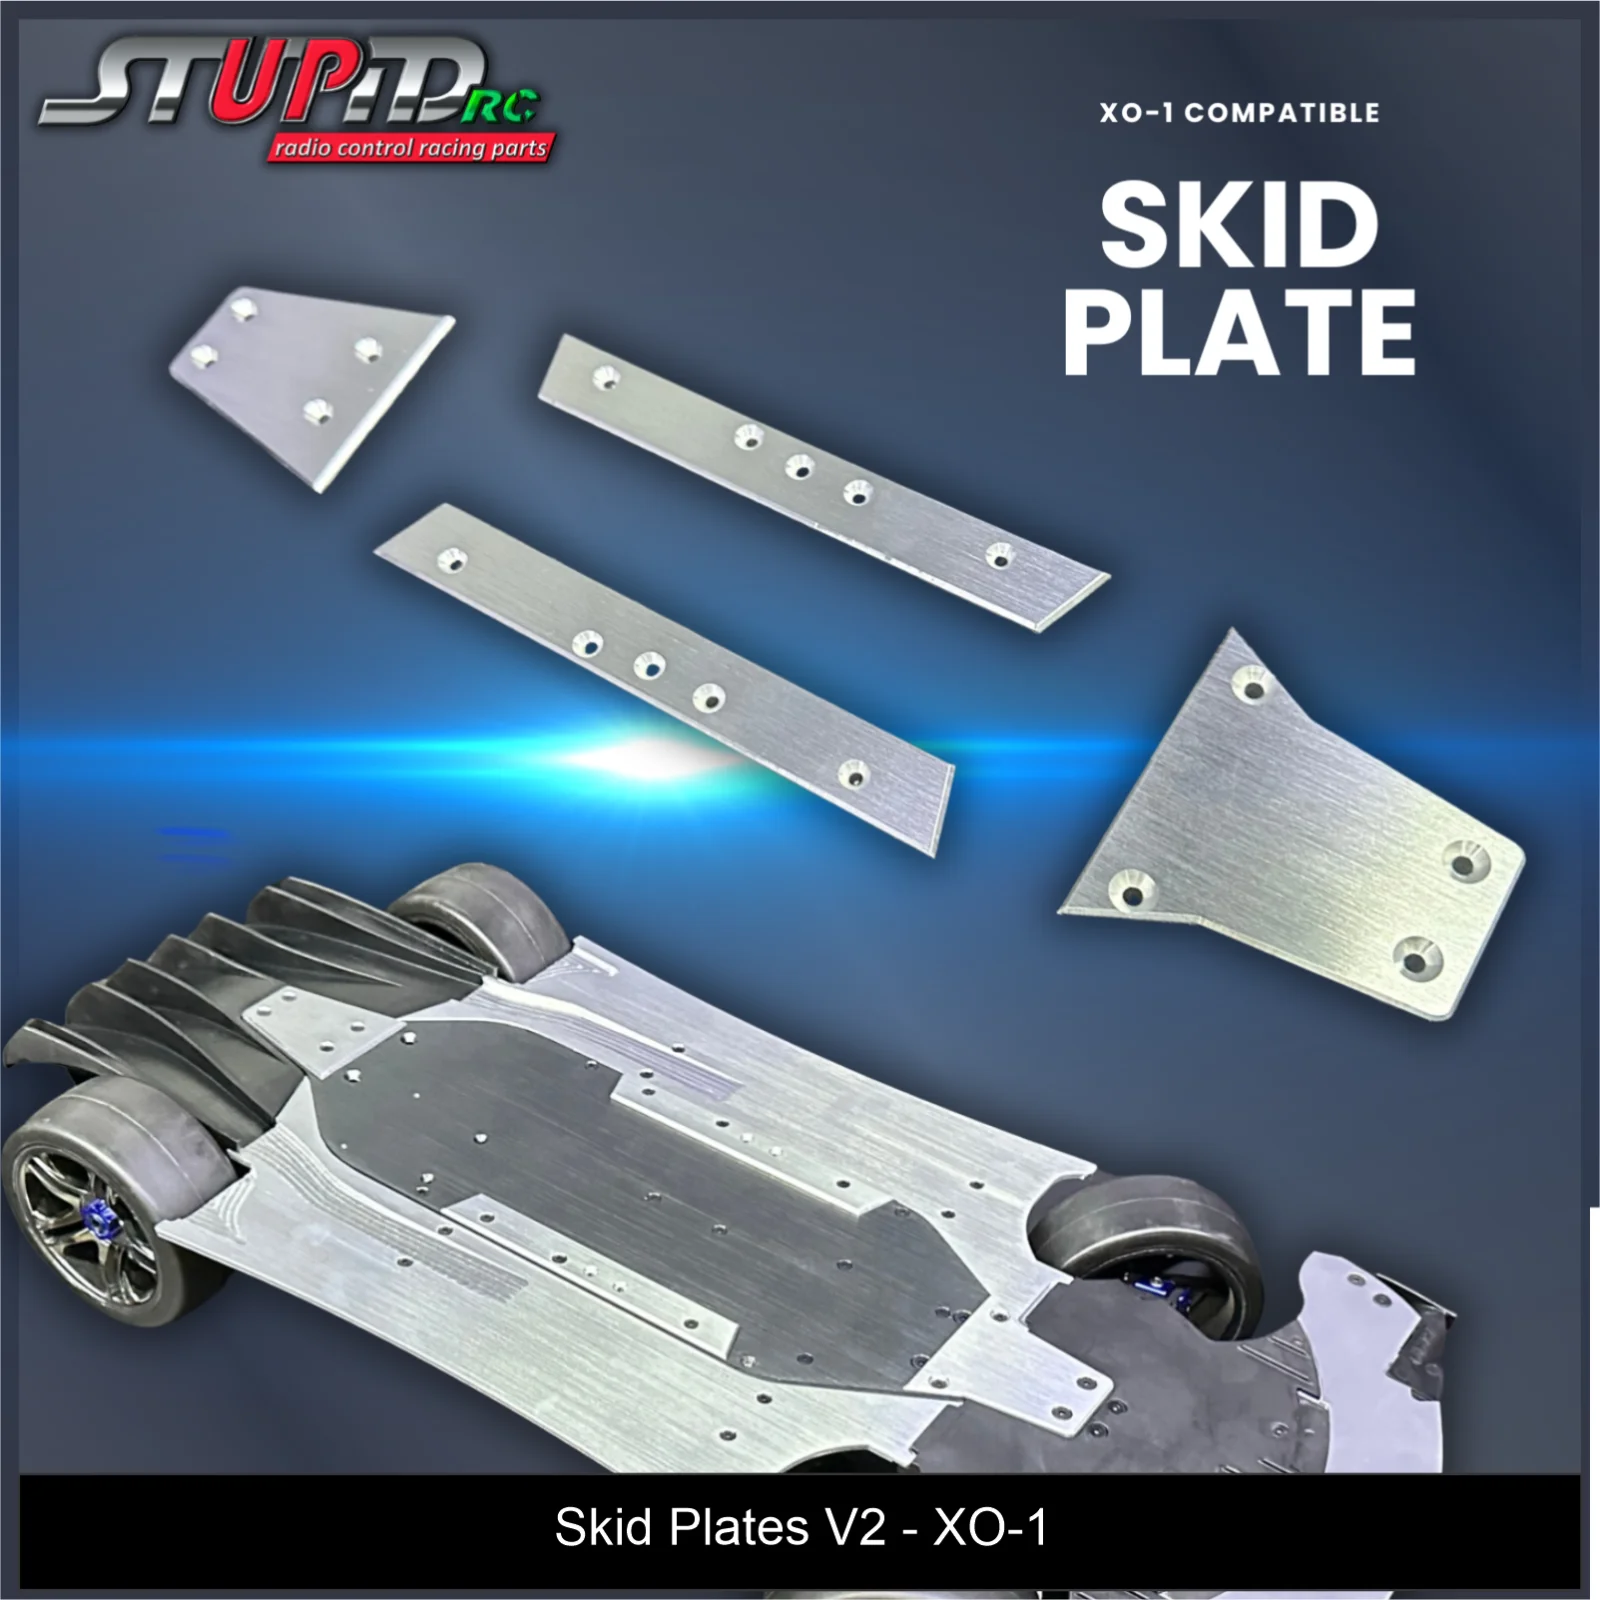 Narcev_stupidrc_xo1_compatible_skid_plates